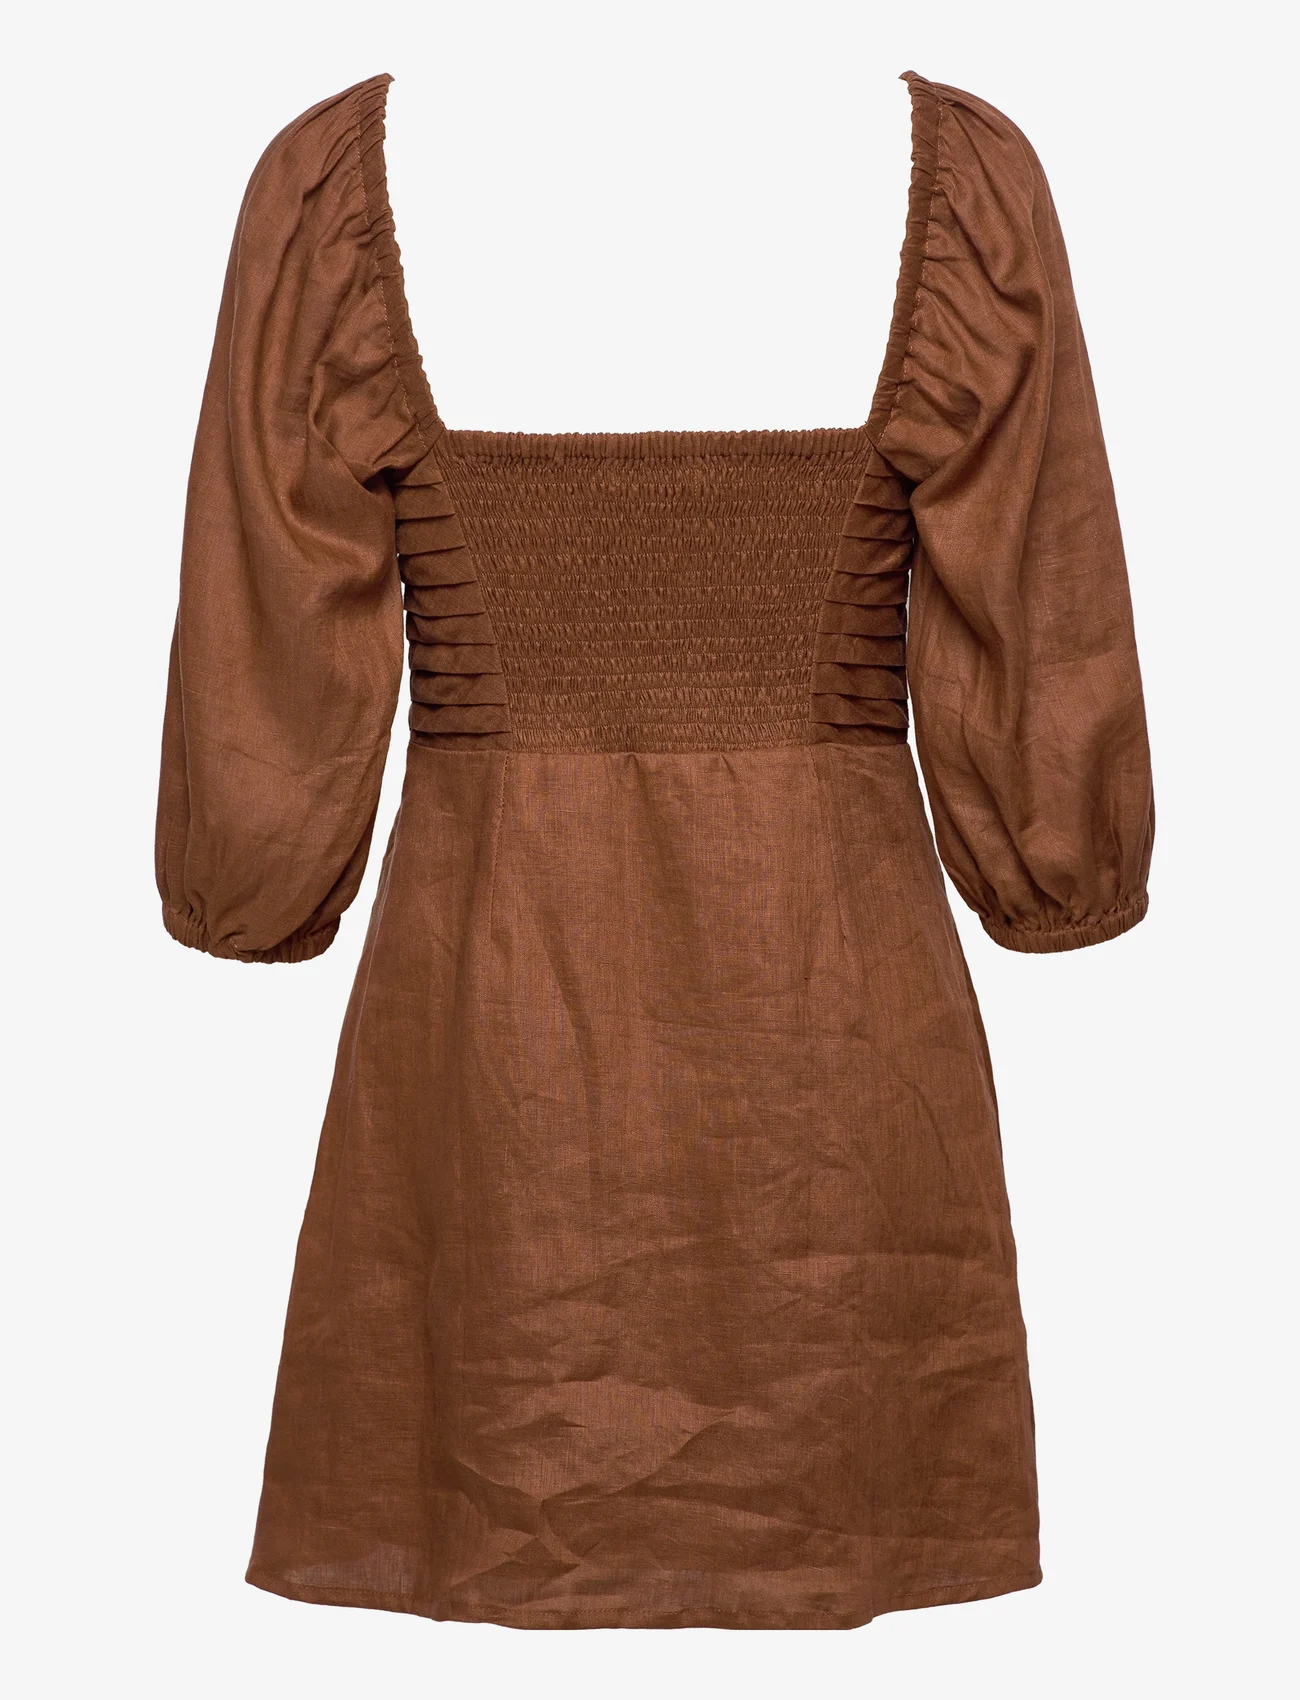 Faithfull The Brand - VENEZIA MINI DRESS - korte jurken - cinnamon - 1